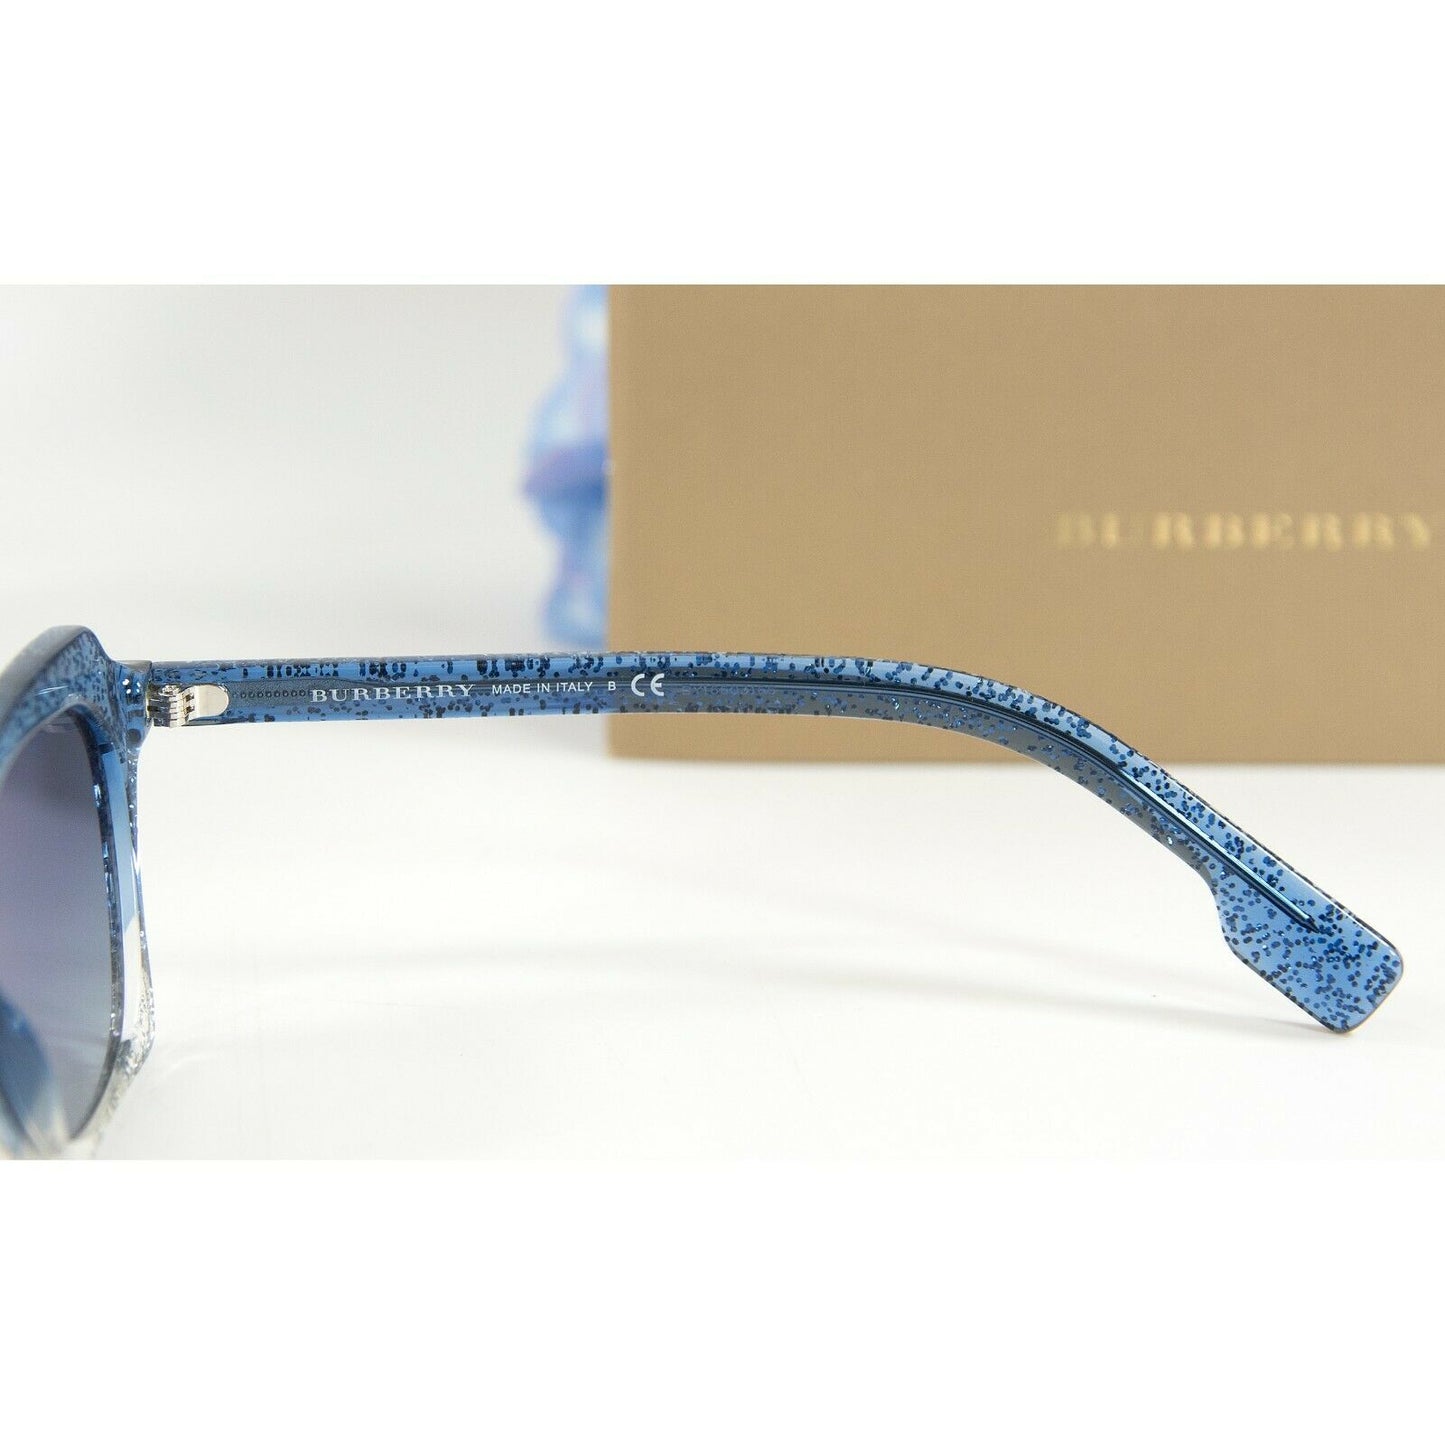 Burberry BE4283 Blue Glitter Acrylic Cat Eye Logo Sunglasses NWT Case